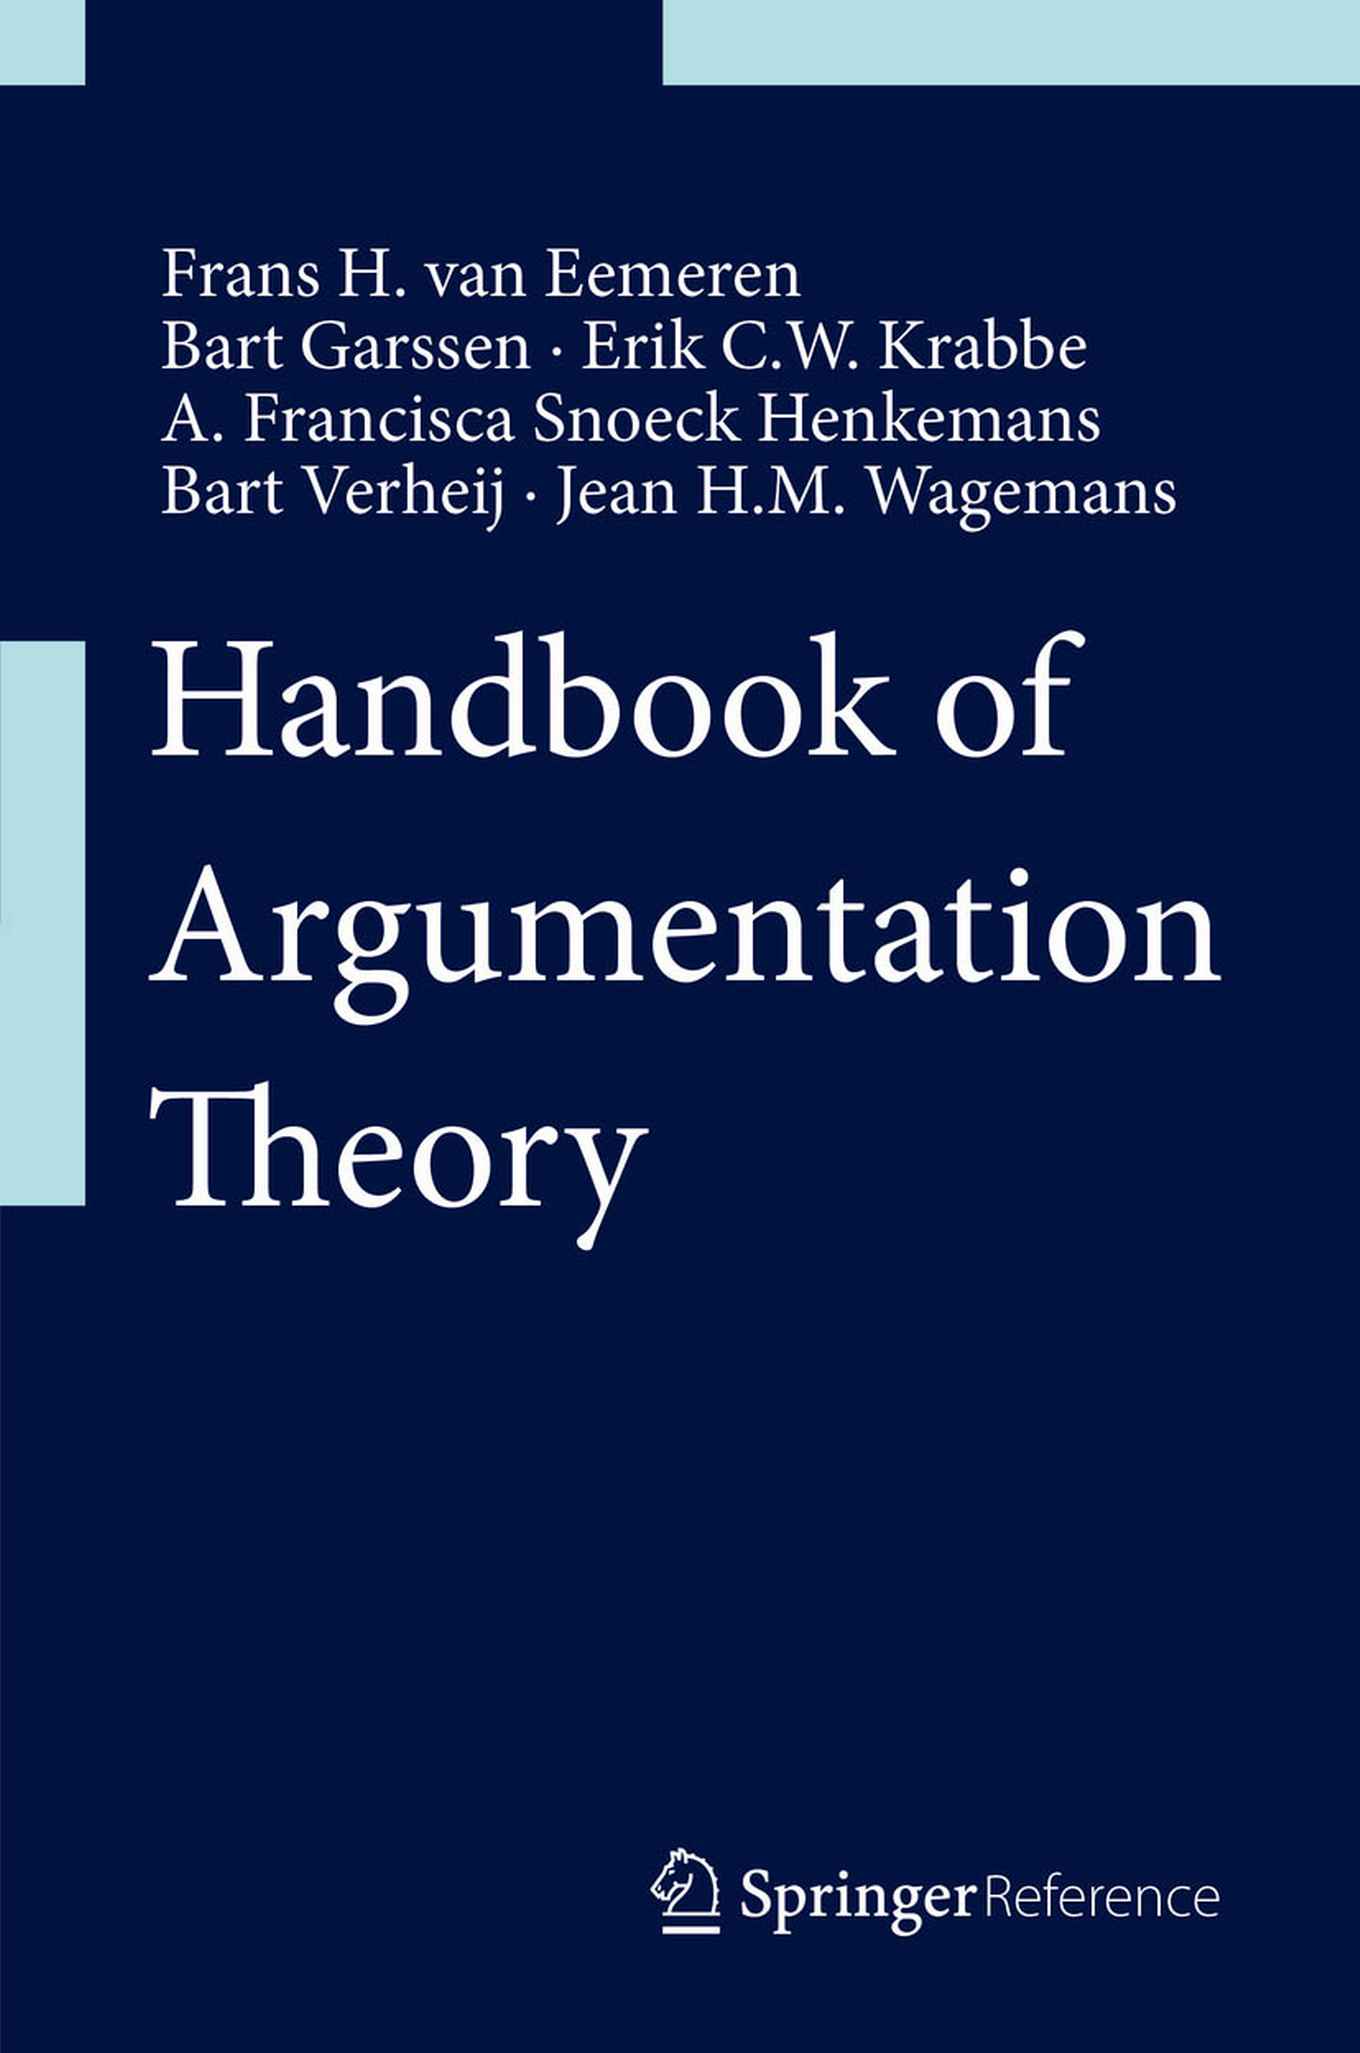 Handbook of argumentation theory